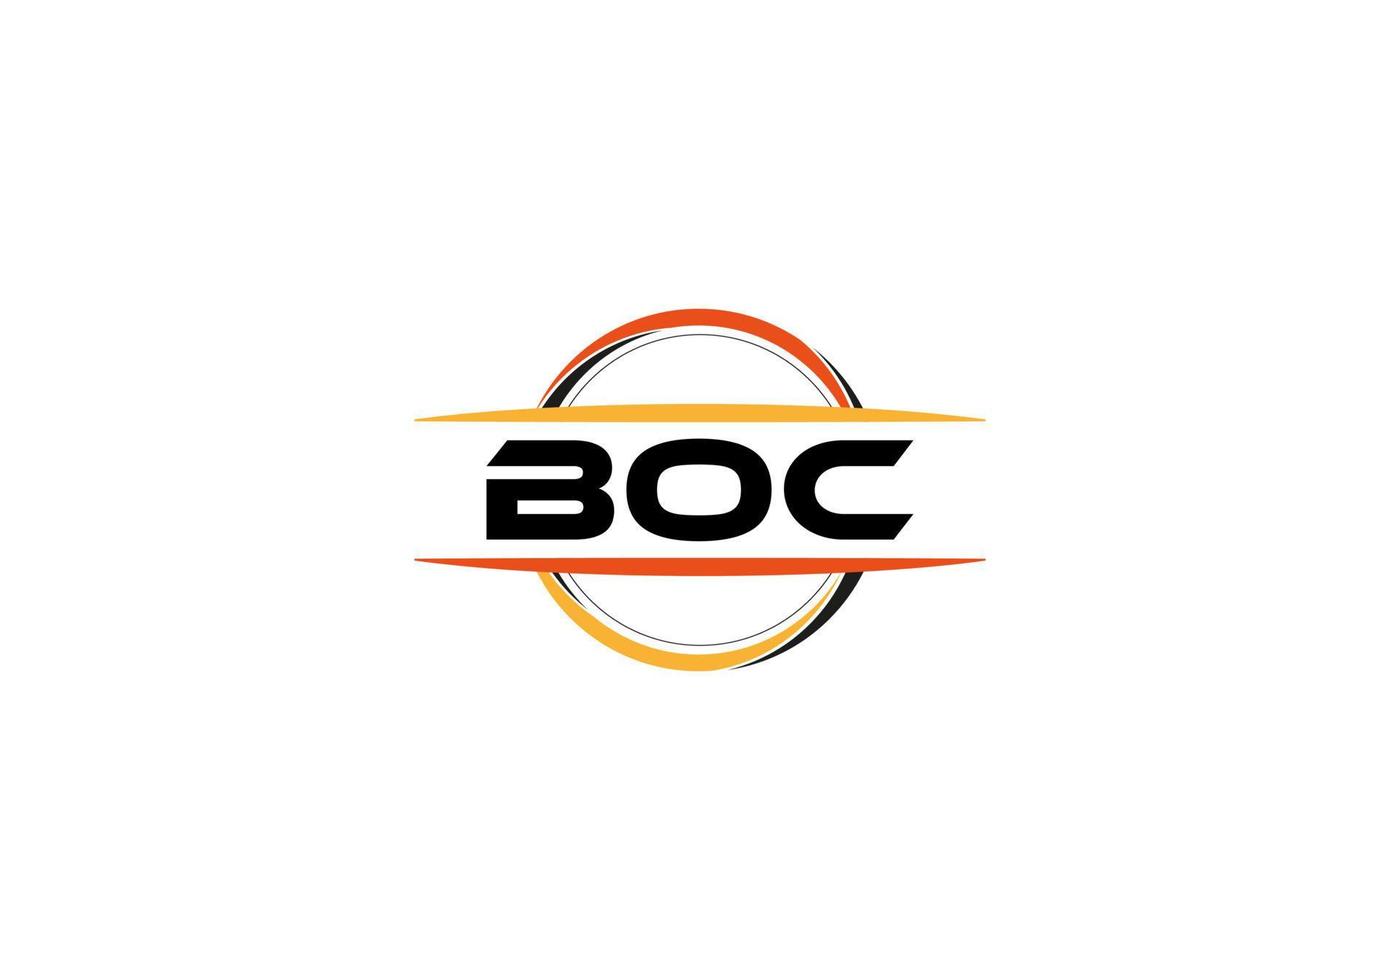 BOC letter royalty ellipse shape logo. BOC brush art logo. BOC logo for a company, business, and commercial use. vector